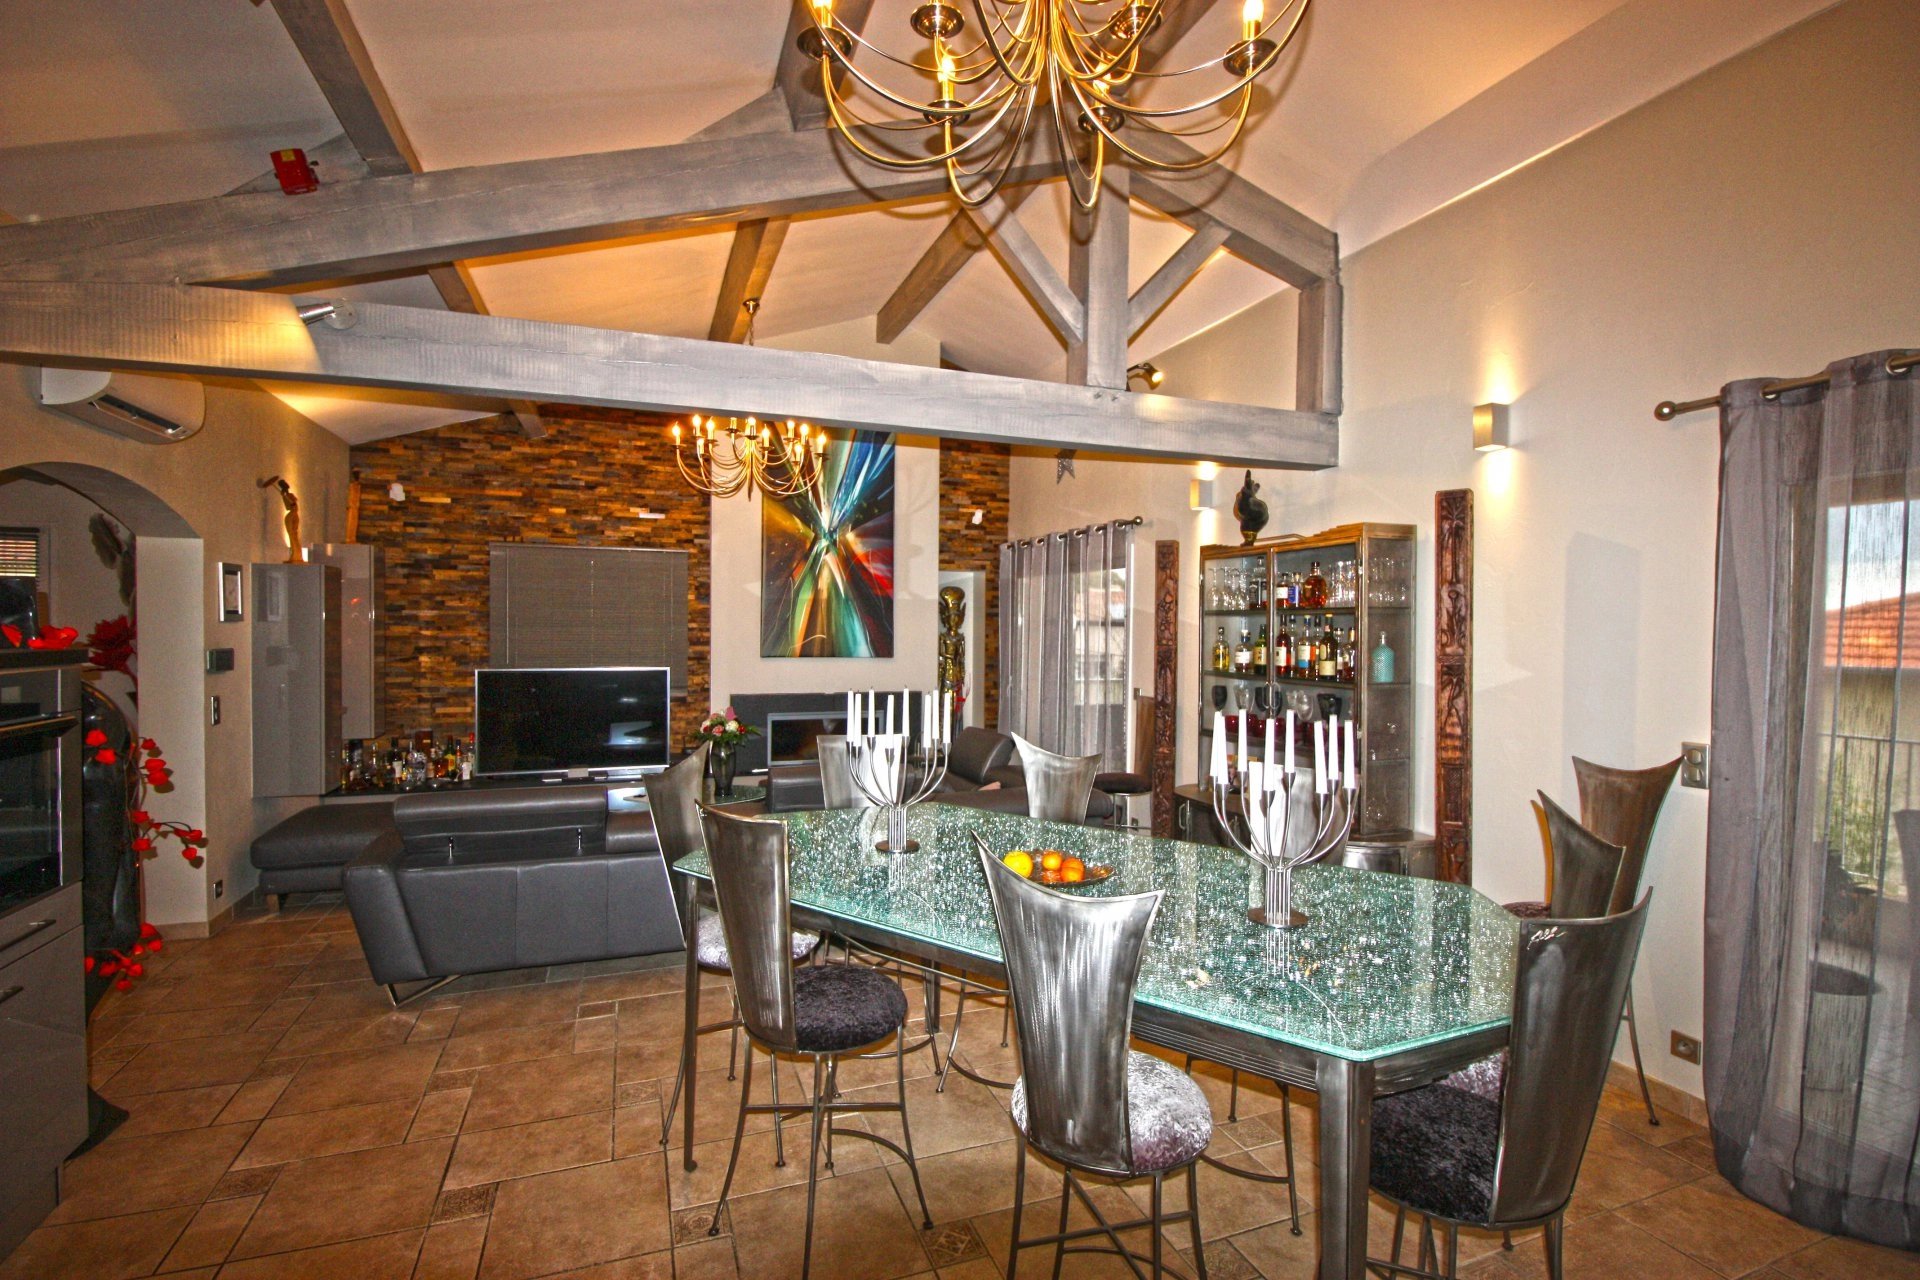 Dining room Chandelier Exposed bricks Fireplace Natural light Kitchen bar Tile